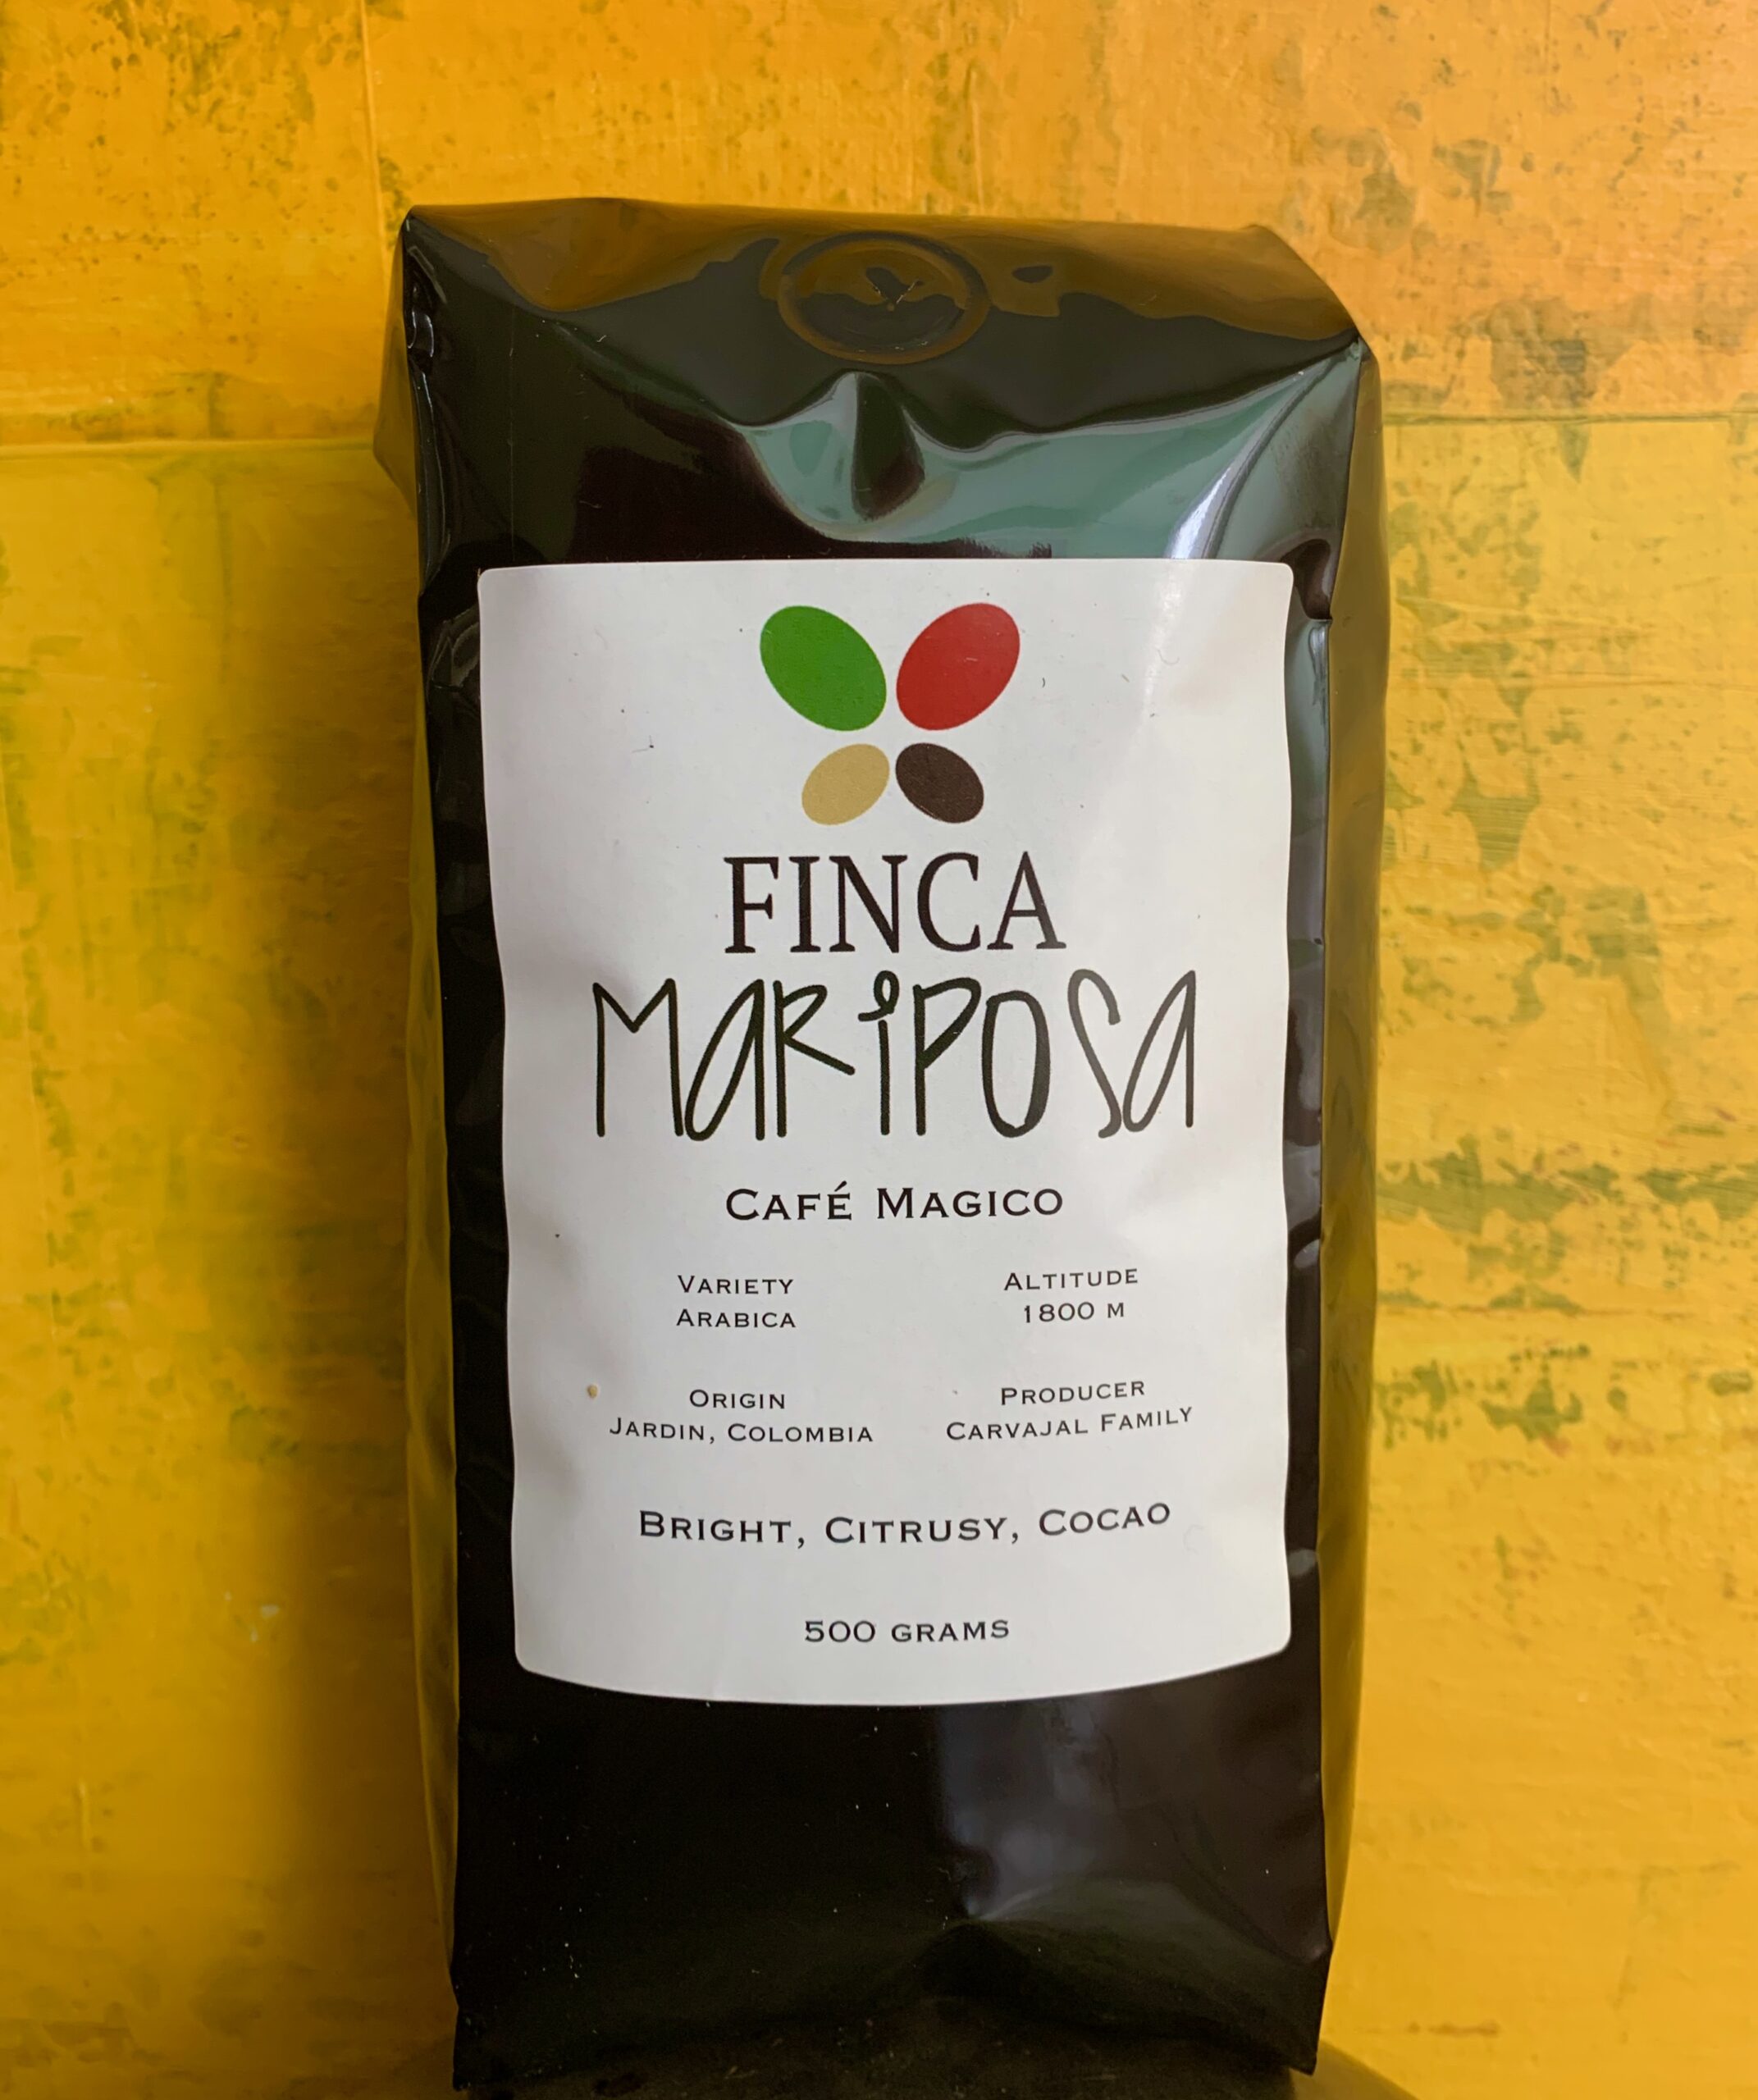 Jardin coffee bag for Sale at Finca Mariposa